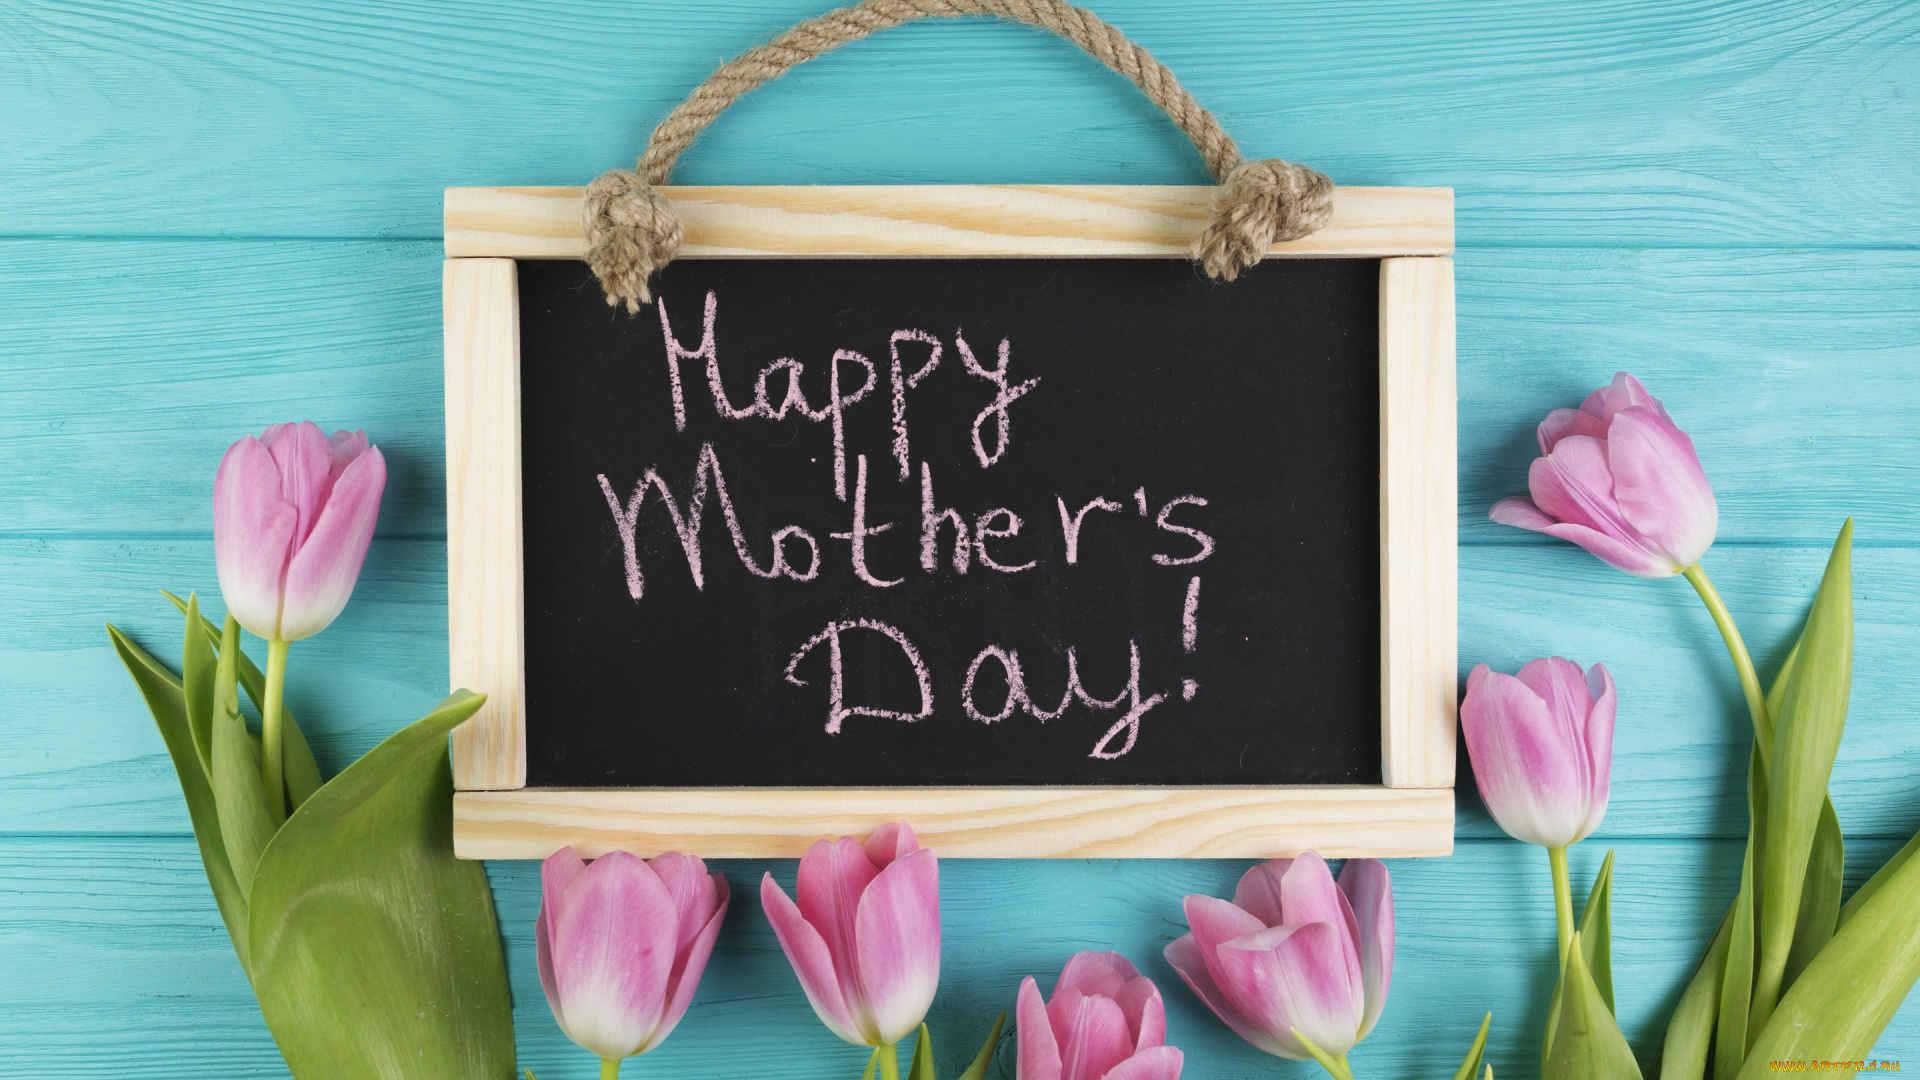 праздничные, день, матери, gift, тюльпаны, tulips, pink, wood, fresh, розовые, mother's, day, цветы, flowers, spring, доска, подарок, tender